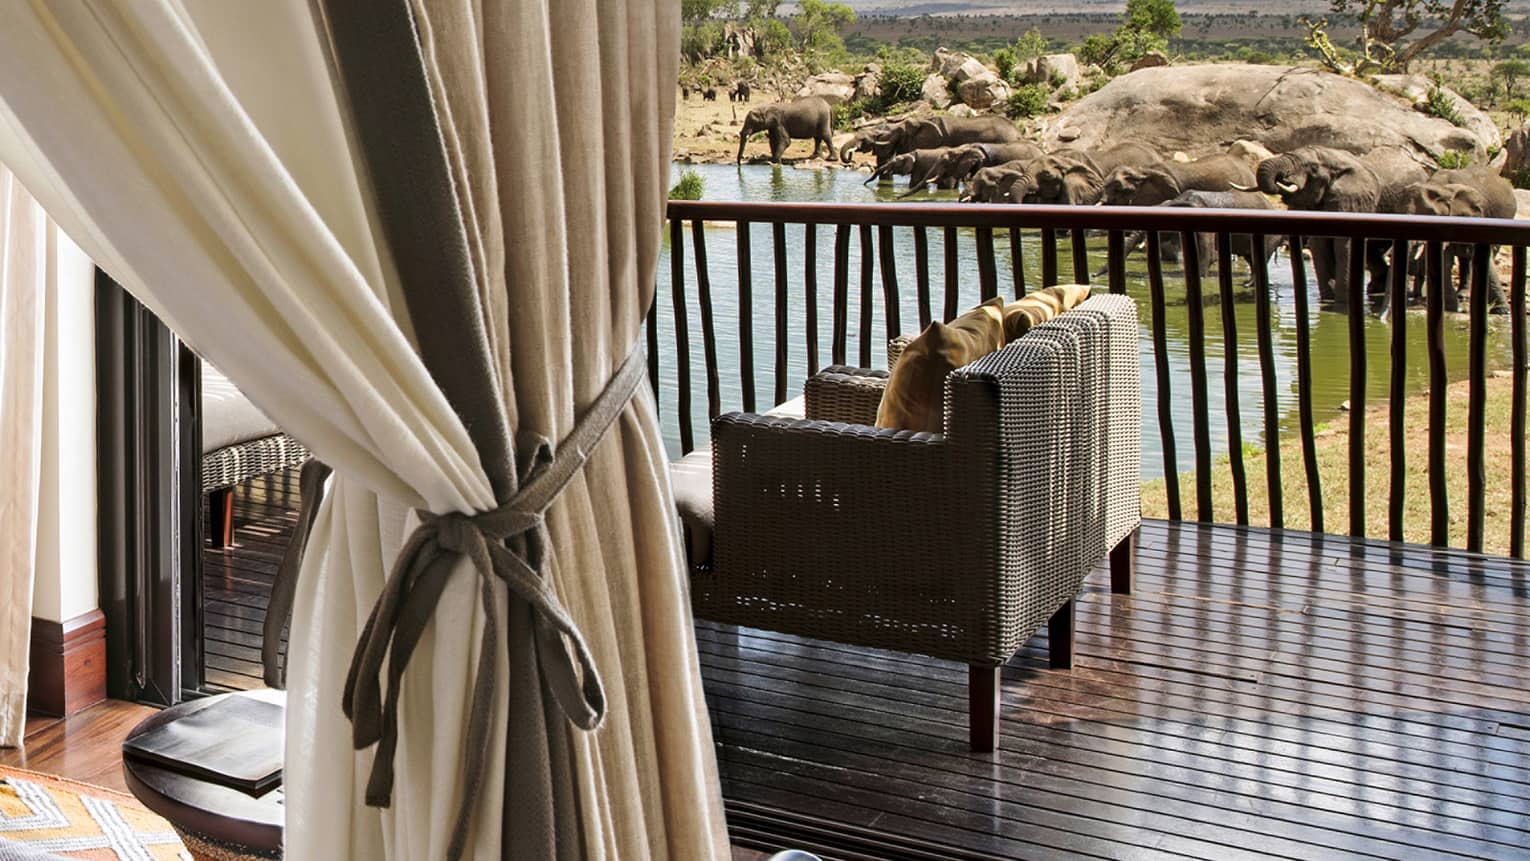 Savannah Room tied curtains in front of wicker loveseat on patio by elephants, waterhole